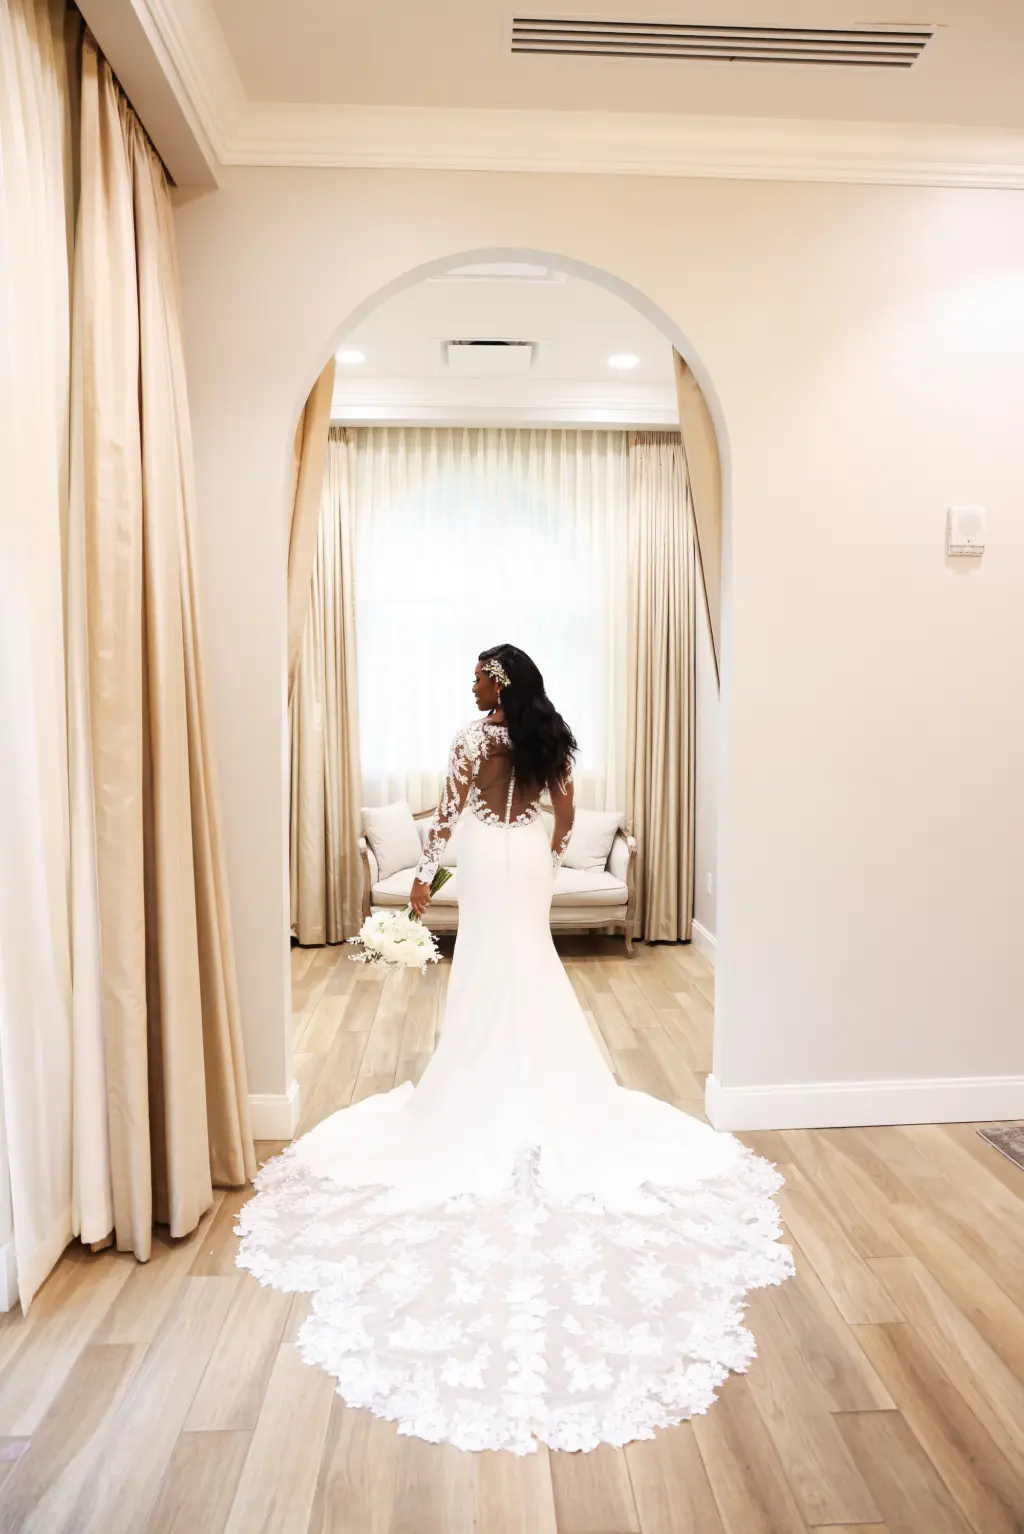 Sheer Lace Long Sleeve Fit and Flare Wedding Dress Ideas | Safety Harbor Venue Harborside Chapel | Lifelong Photography Studio